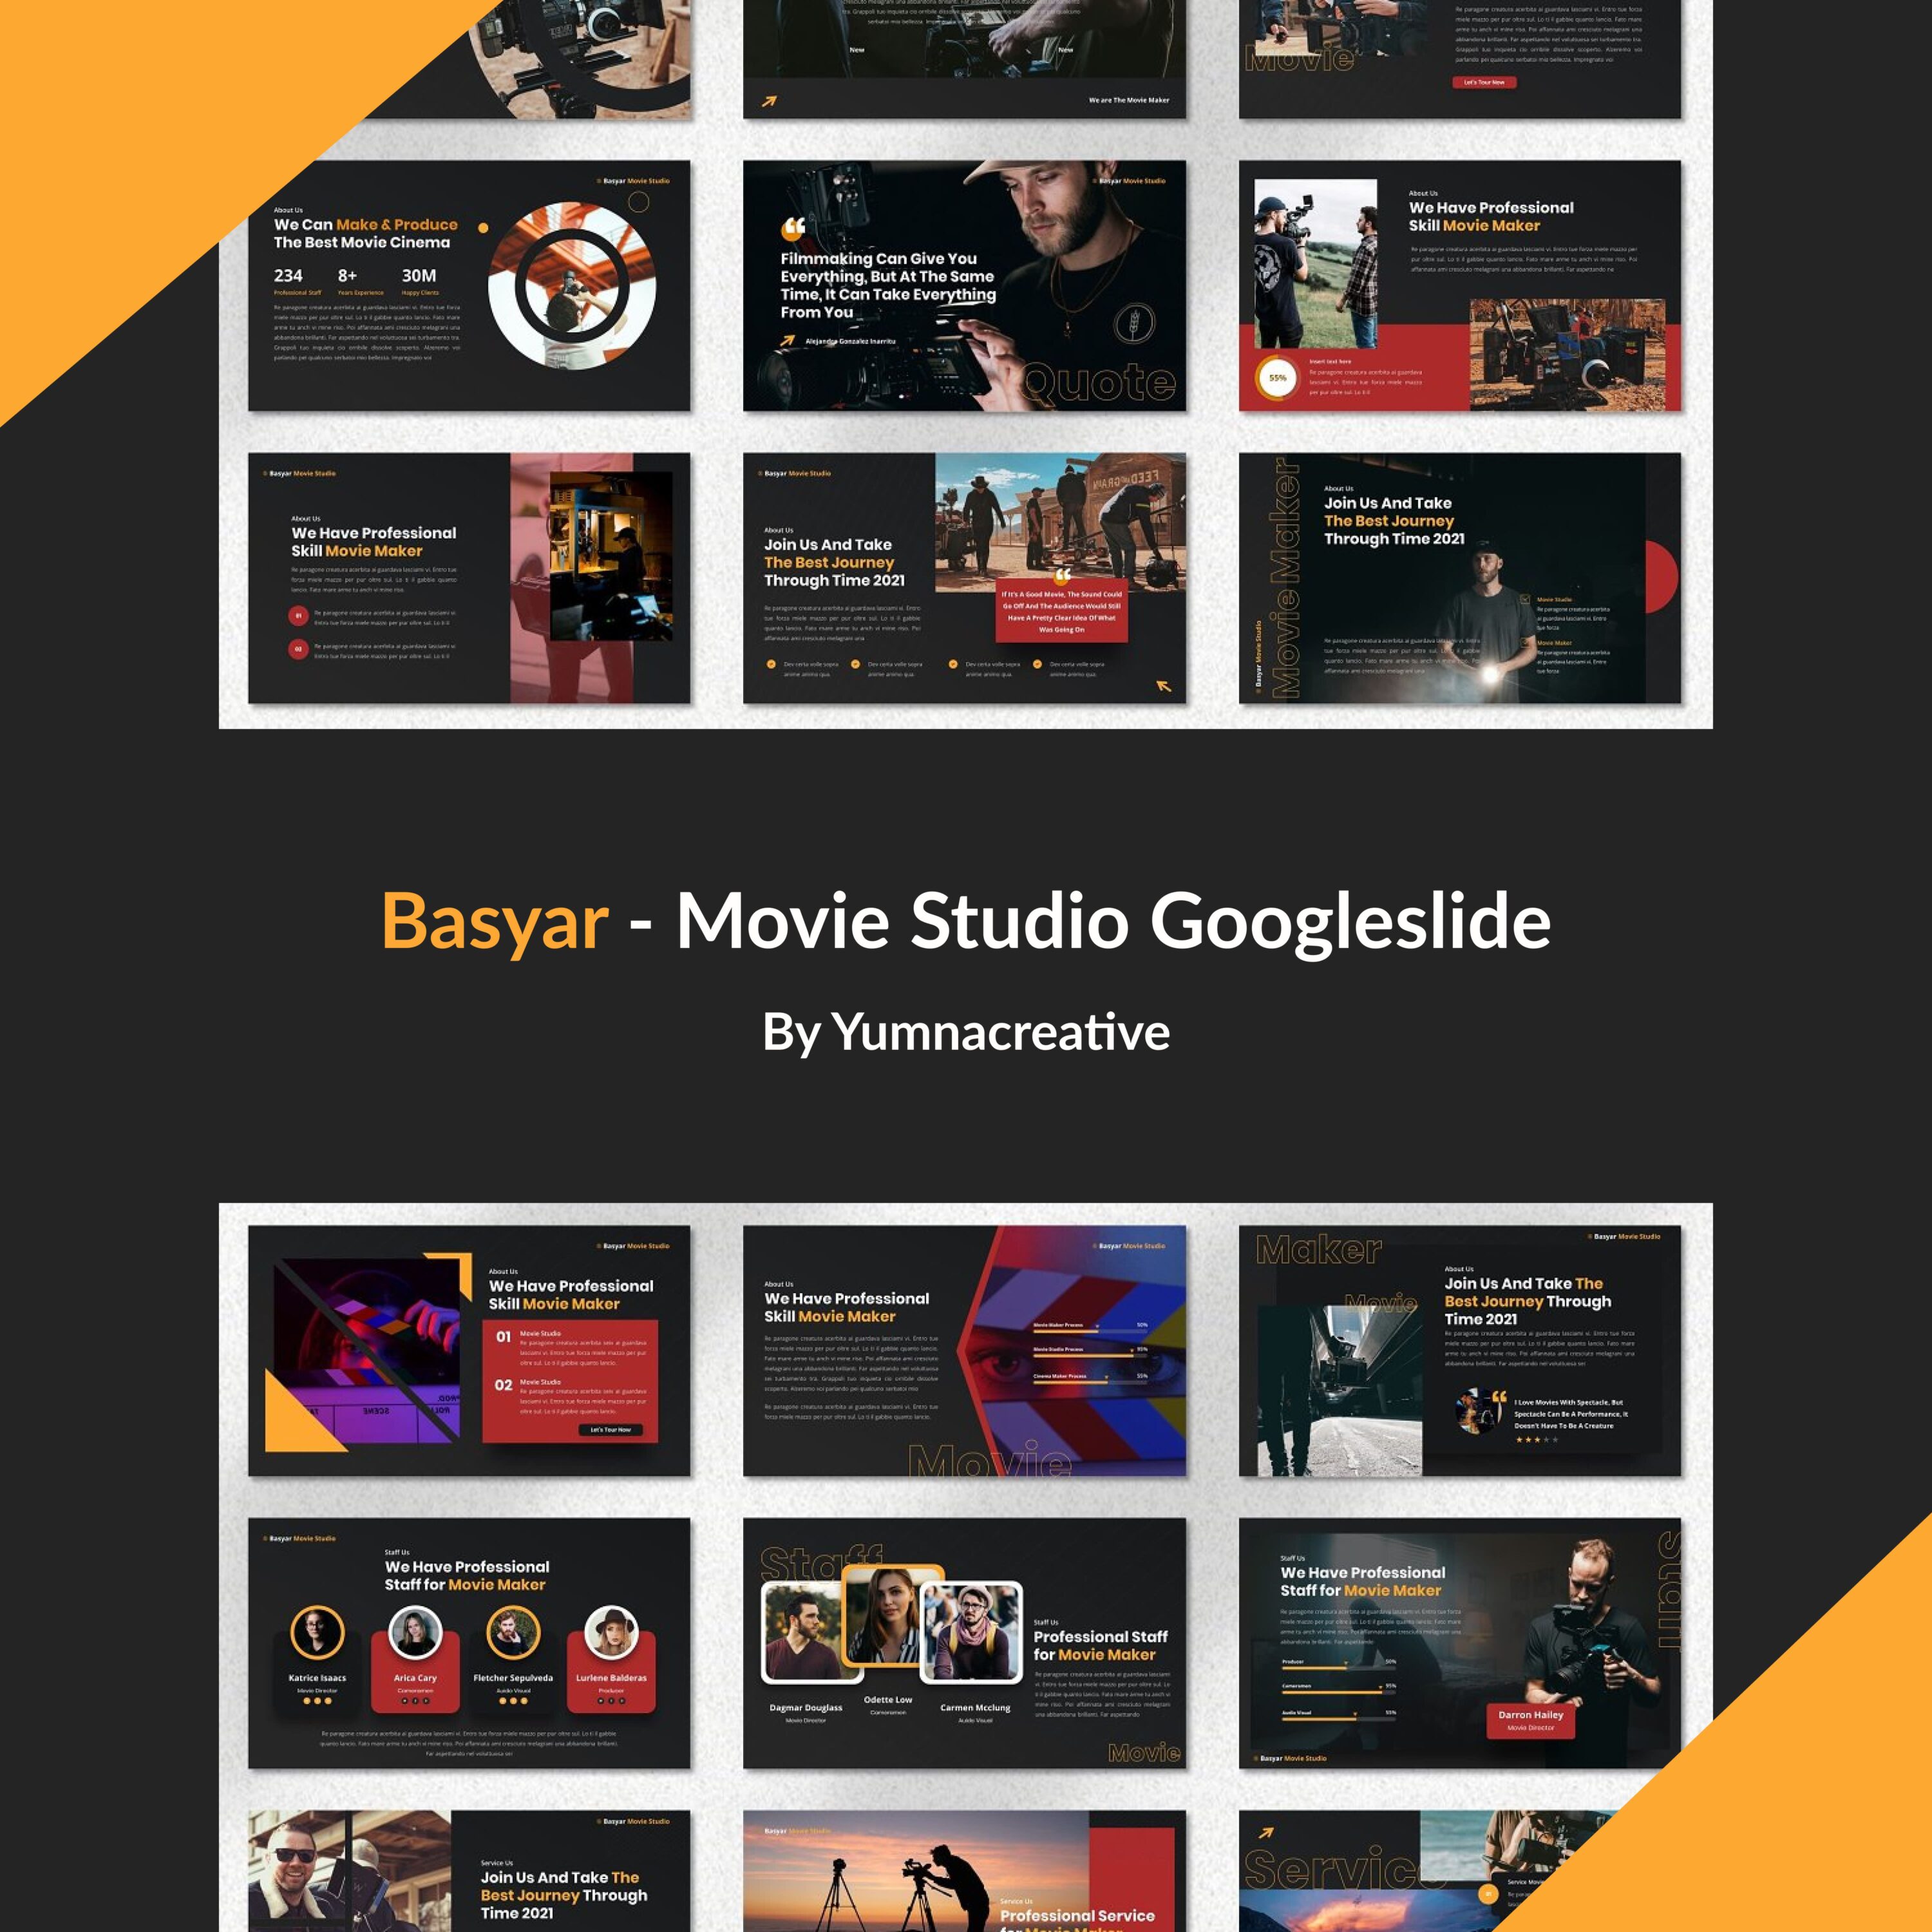 Basyar movie studio googleslide - main image preview.